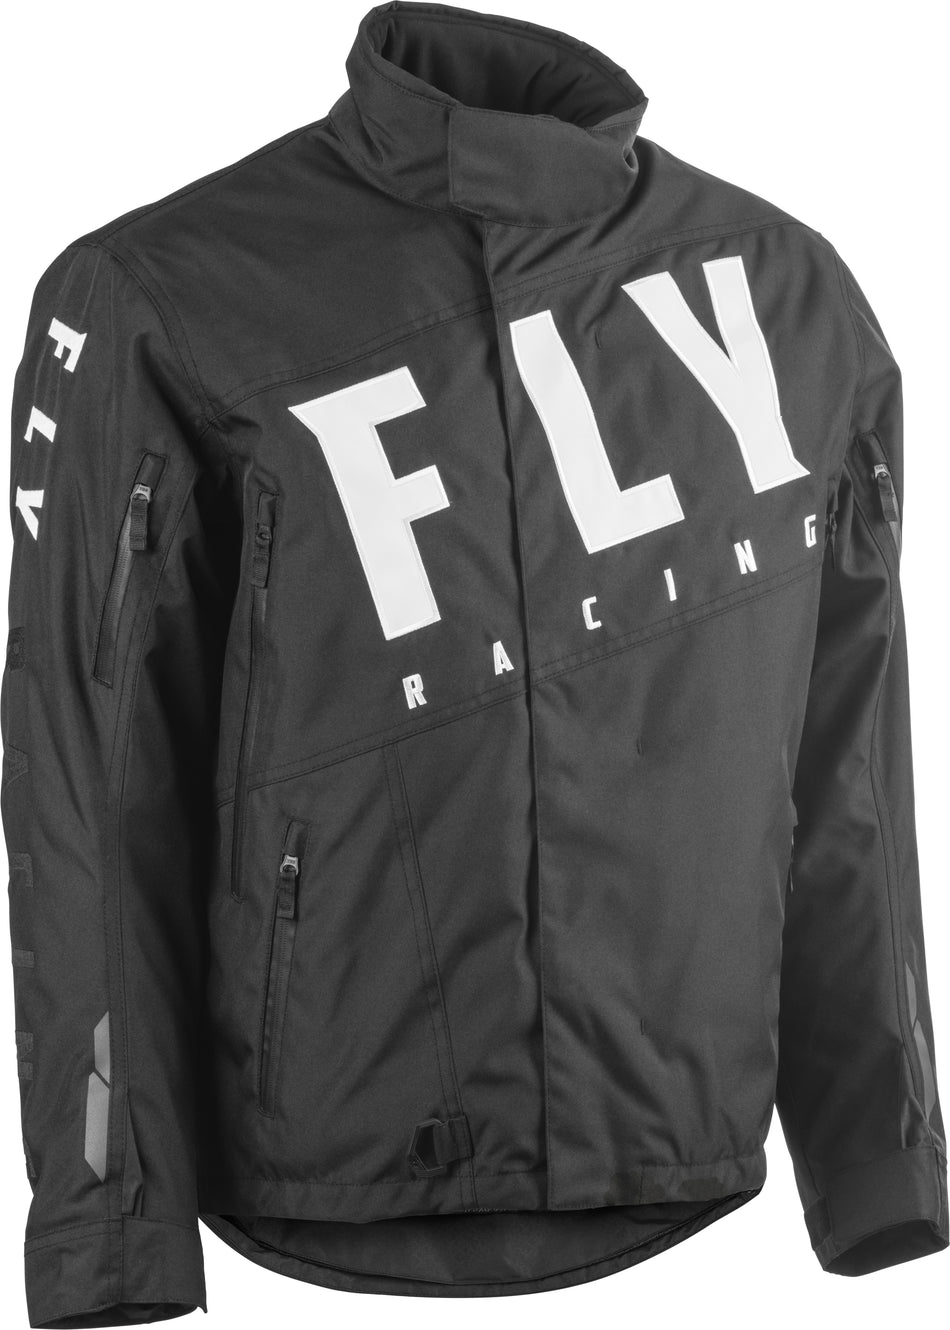 FLY RACING Fly Snx Pro Jacket Black Lg 470-4110L